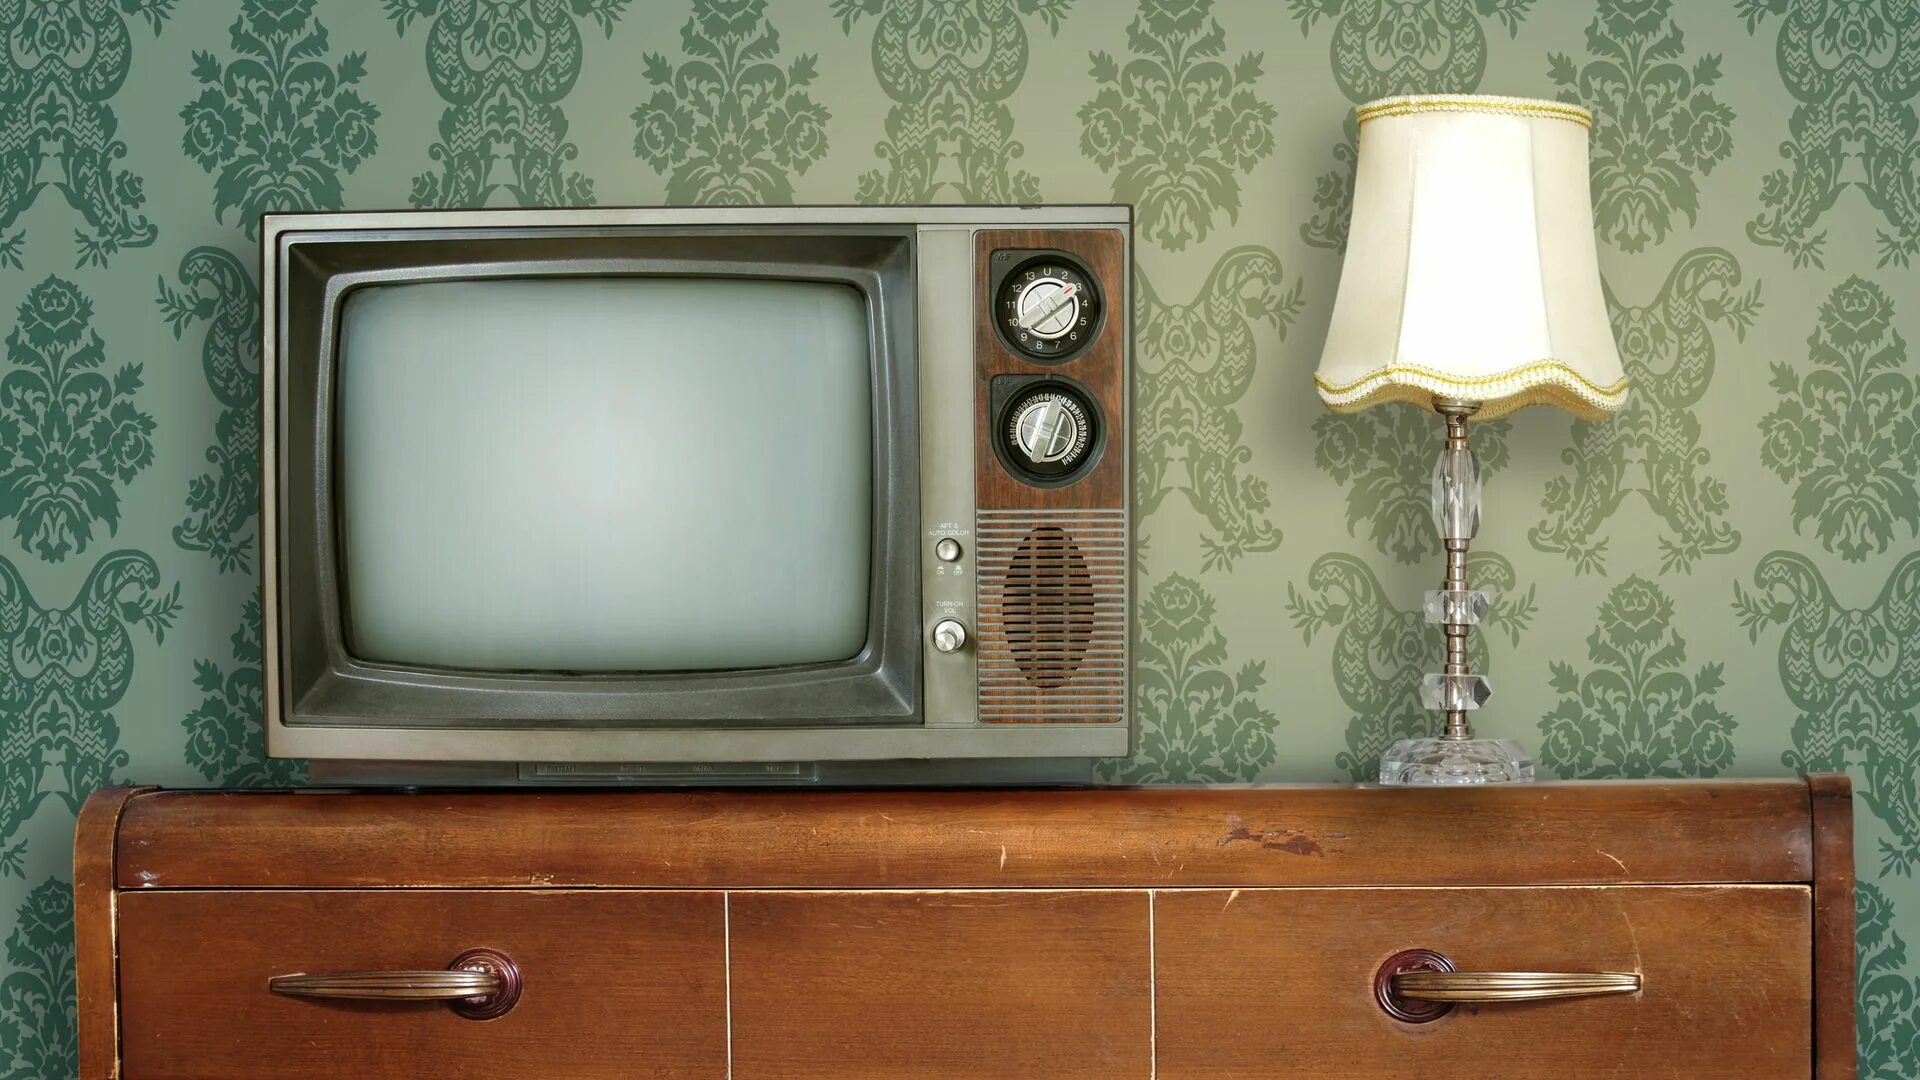 Озвучивай телевизор. Старый телевизор. Старинный телевизор. Старый телевизор в интерьере. Ретро телевизор.